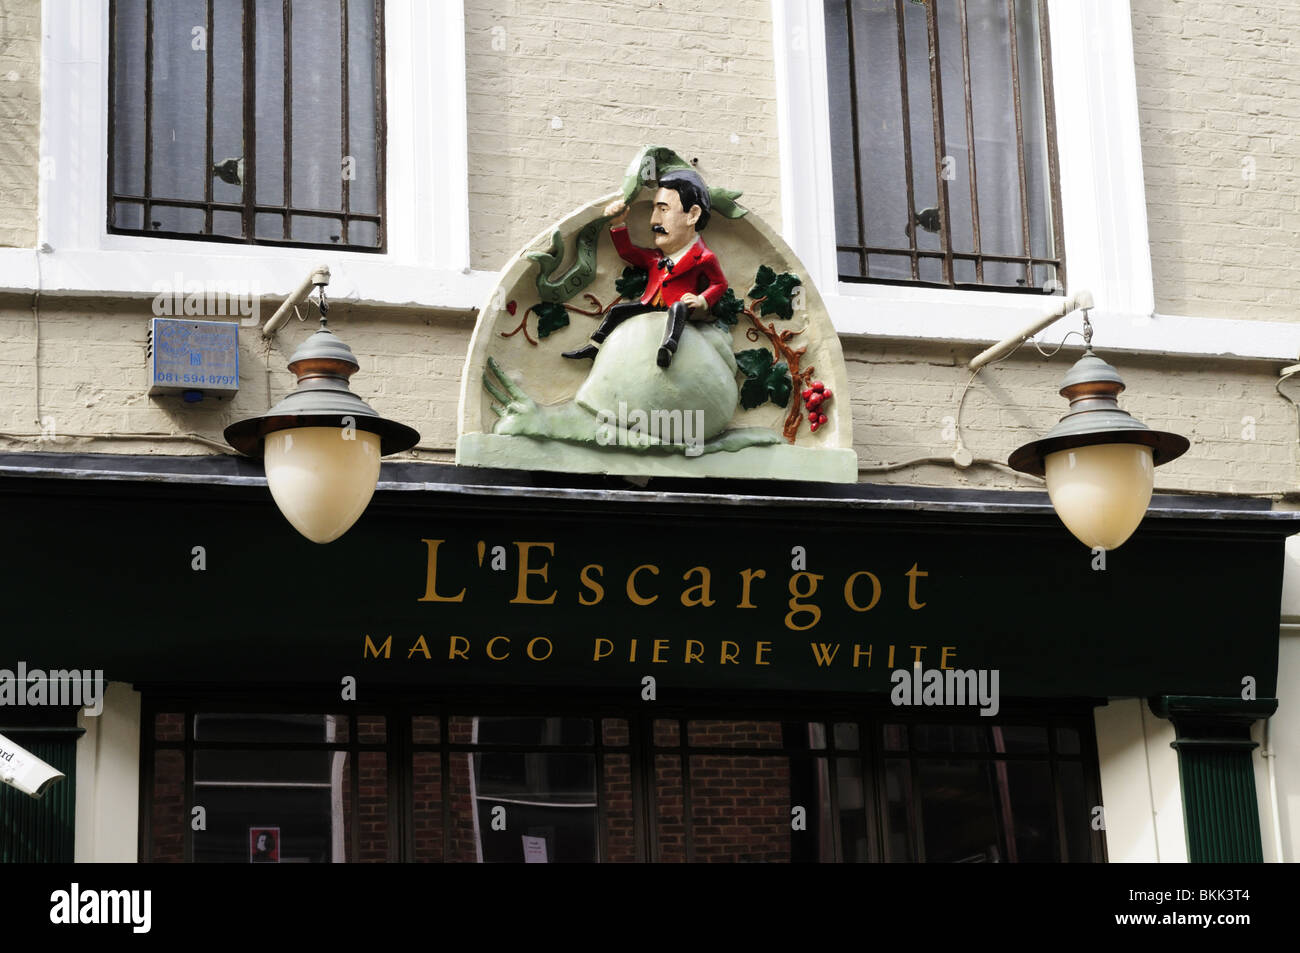 L'Escargot Restaurant owned by Marco Pierre White in Greek Street, Soho, London, England UK Stock Photo